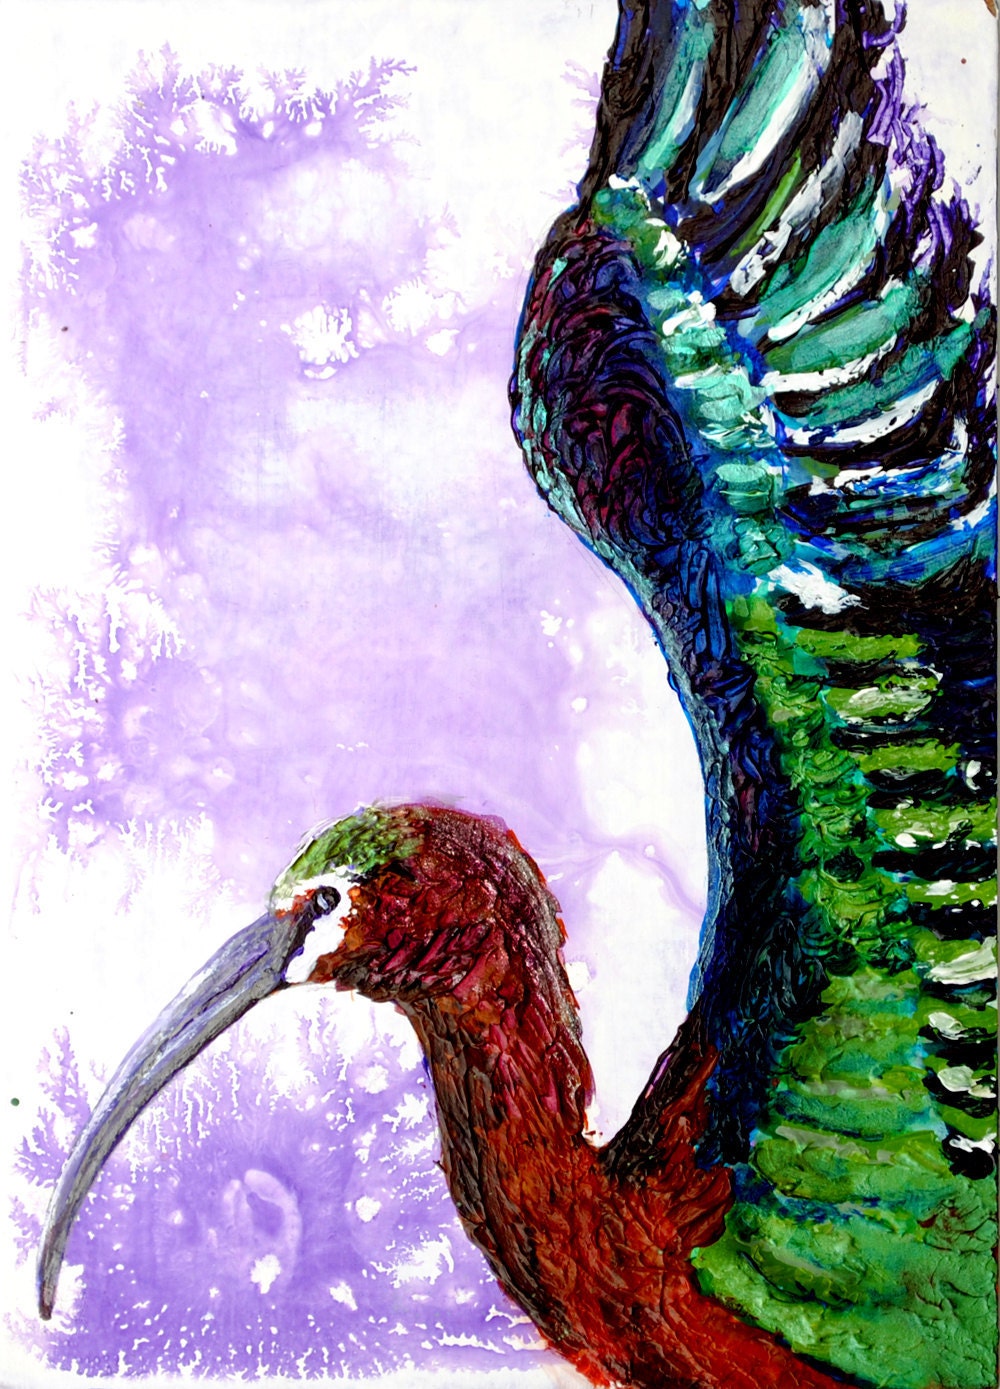 Ibis Bird Painting - Abstract Acrylic - BobbisMixedMediaArt